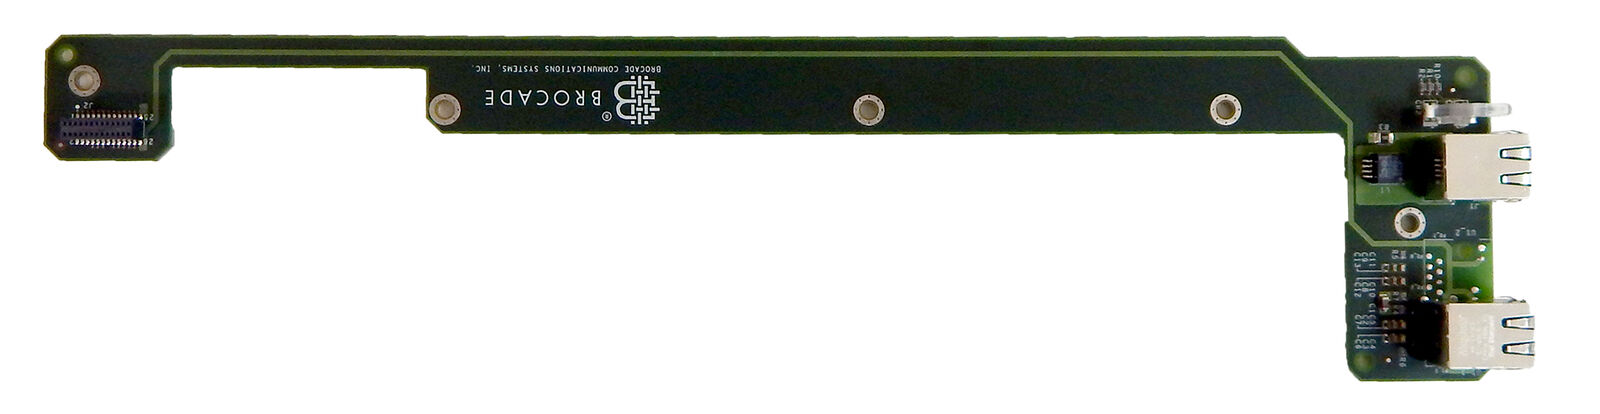 Brocade 7600 FC Switch RJ45 LED Board 40-0300035-05